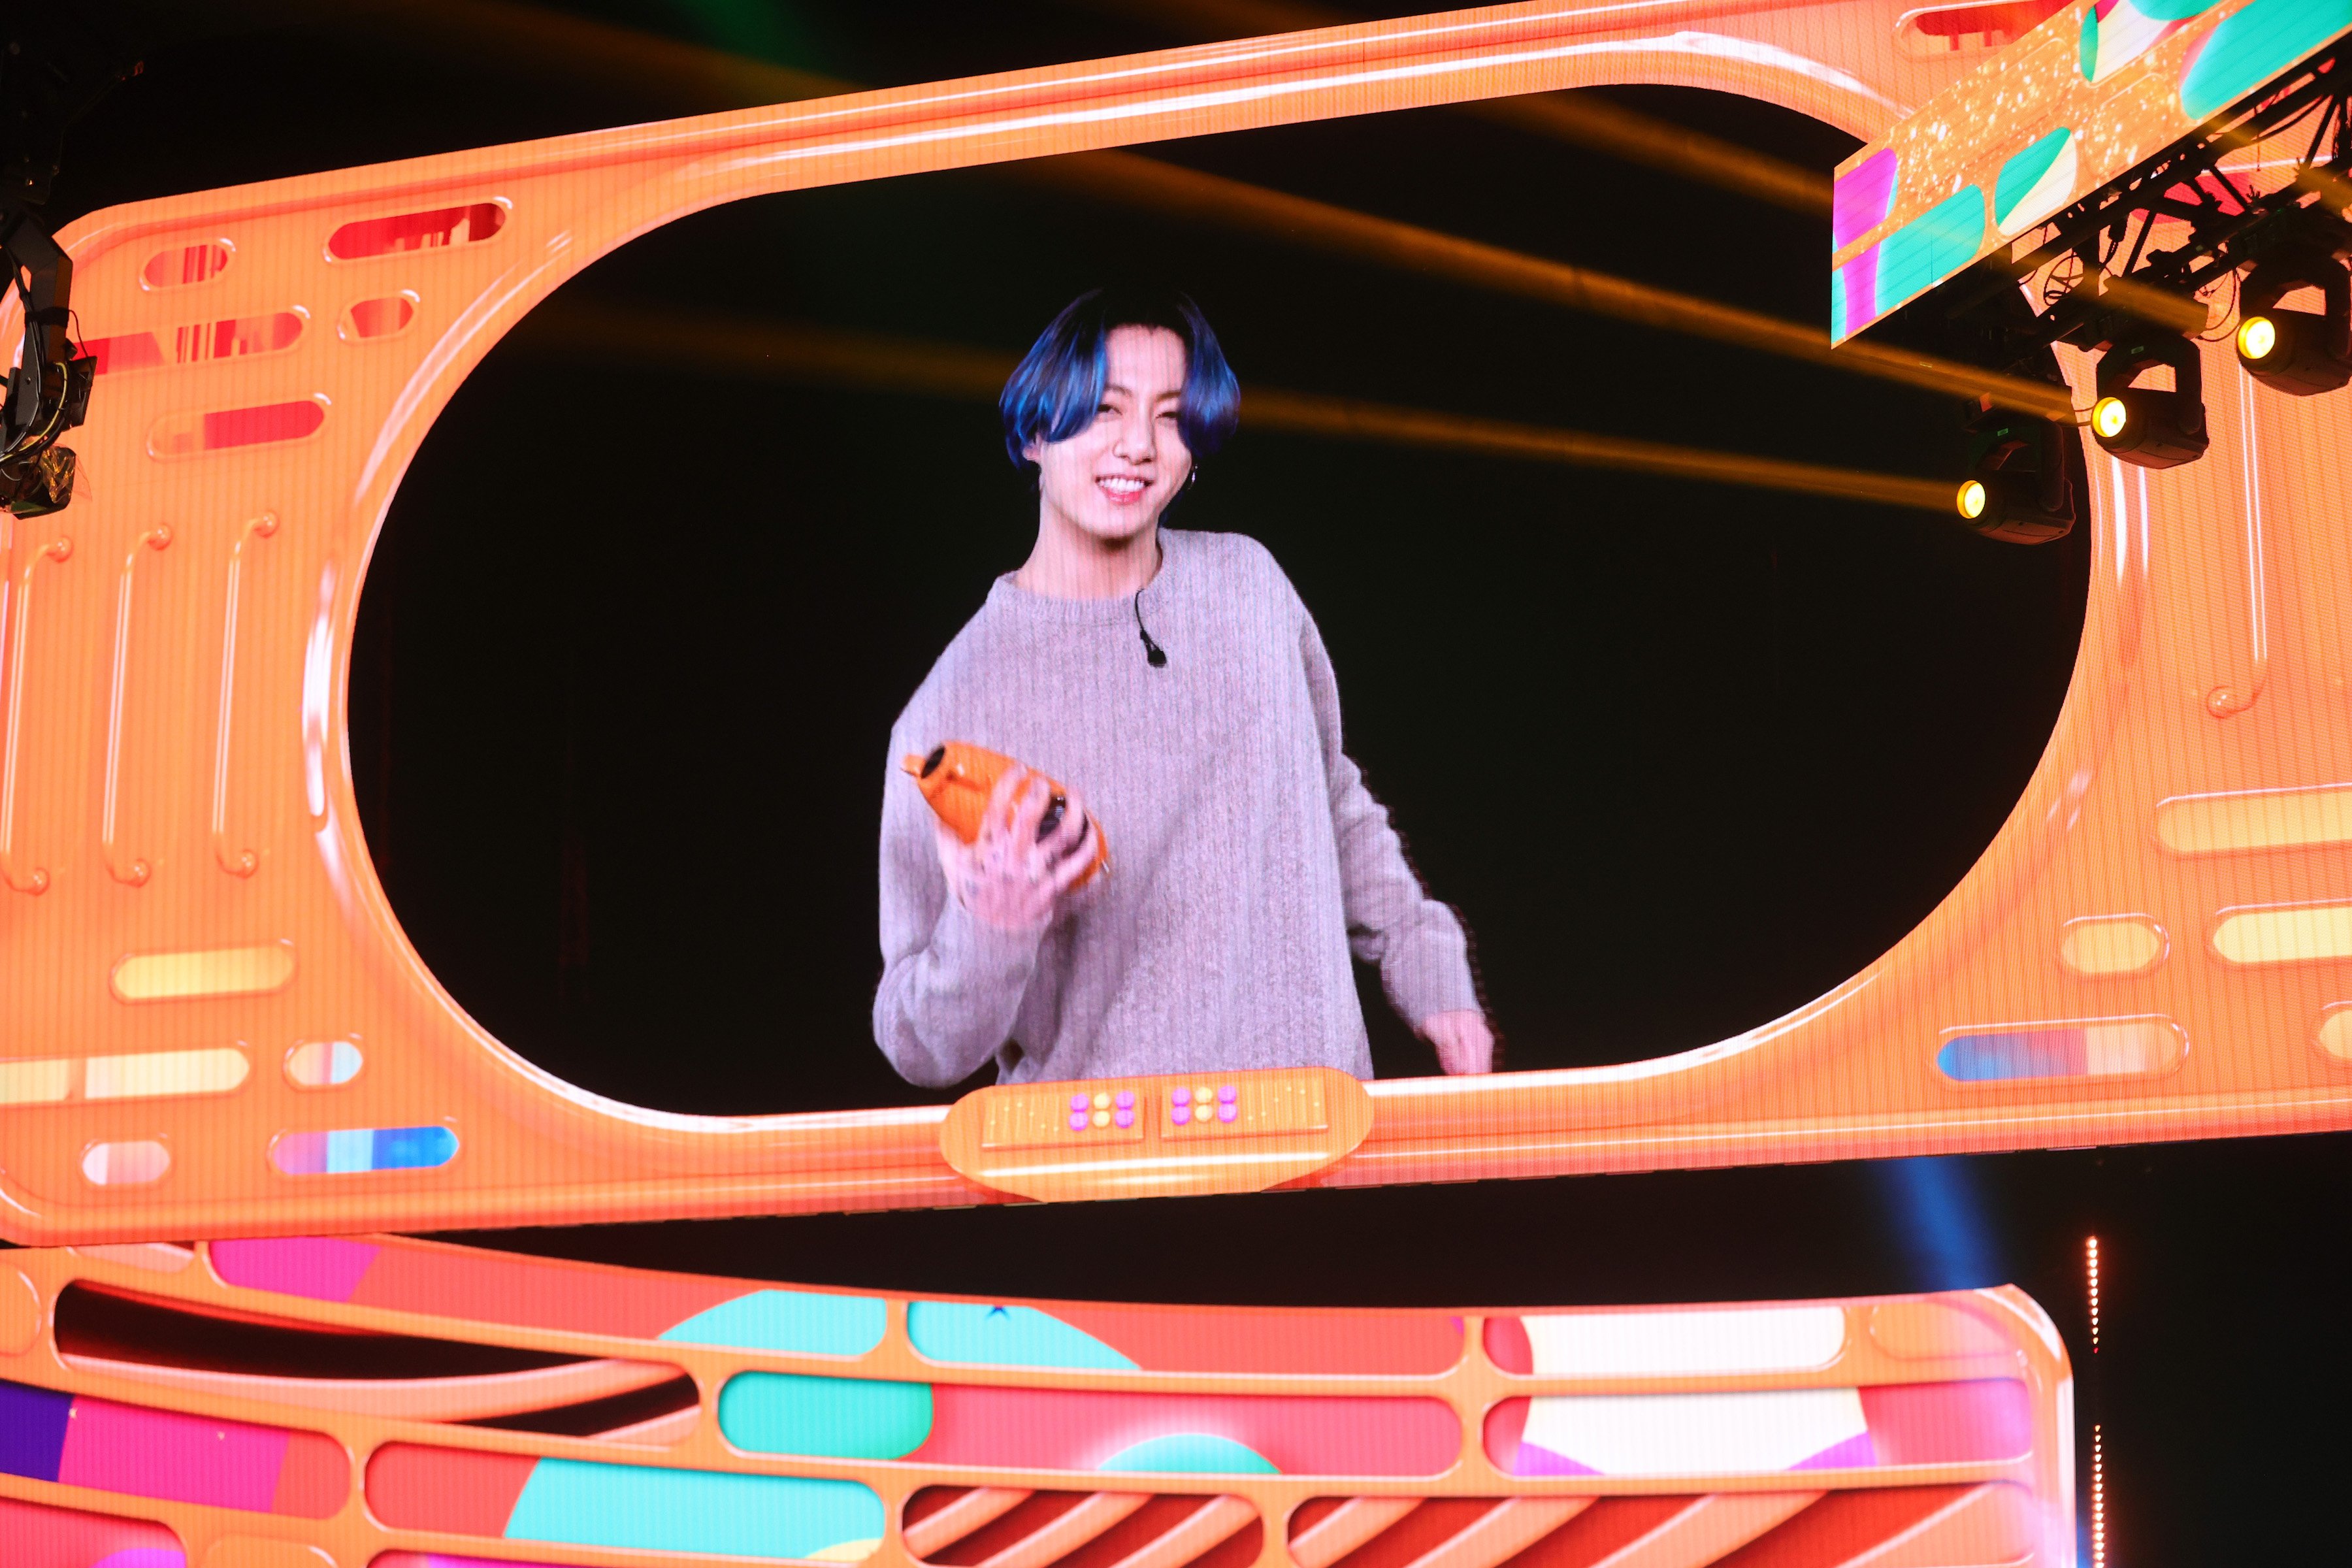 Blue Hair Jungkook of BTS, winner of Favorite Music Group, is seen on screen during Nickelodeon's Kids' Choice Awards